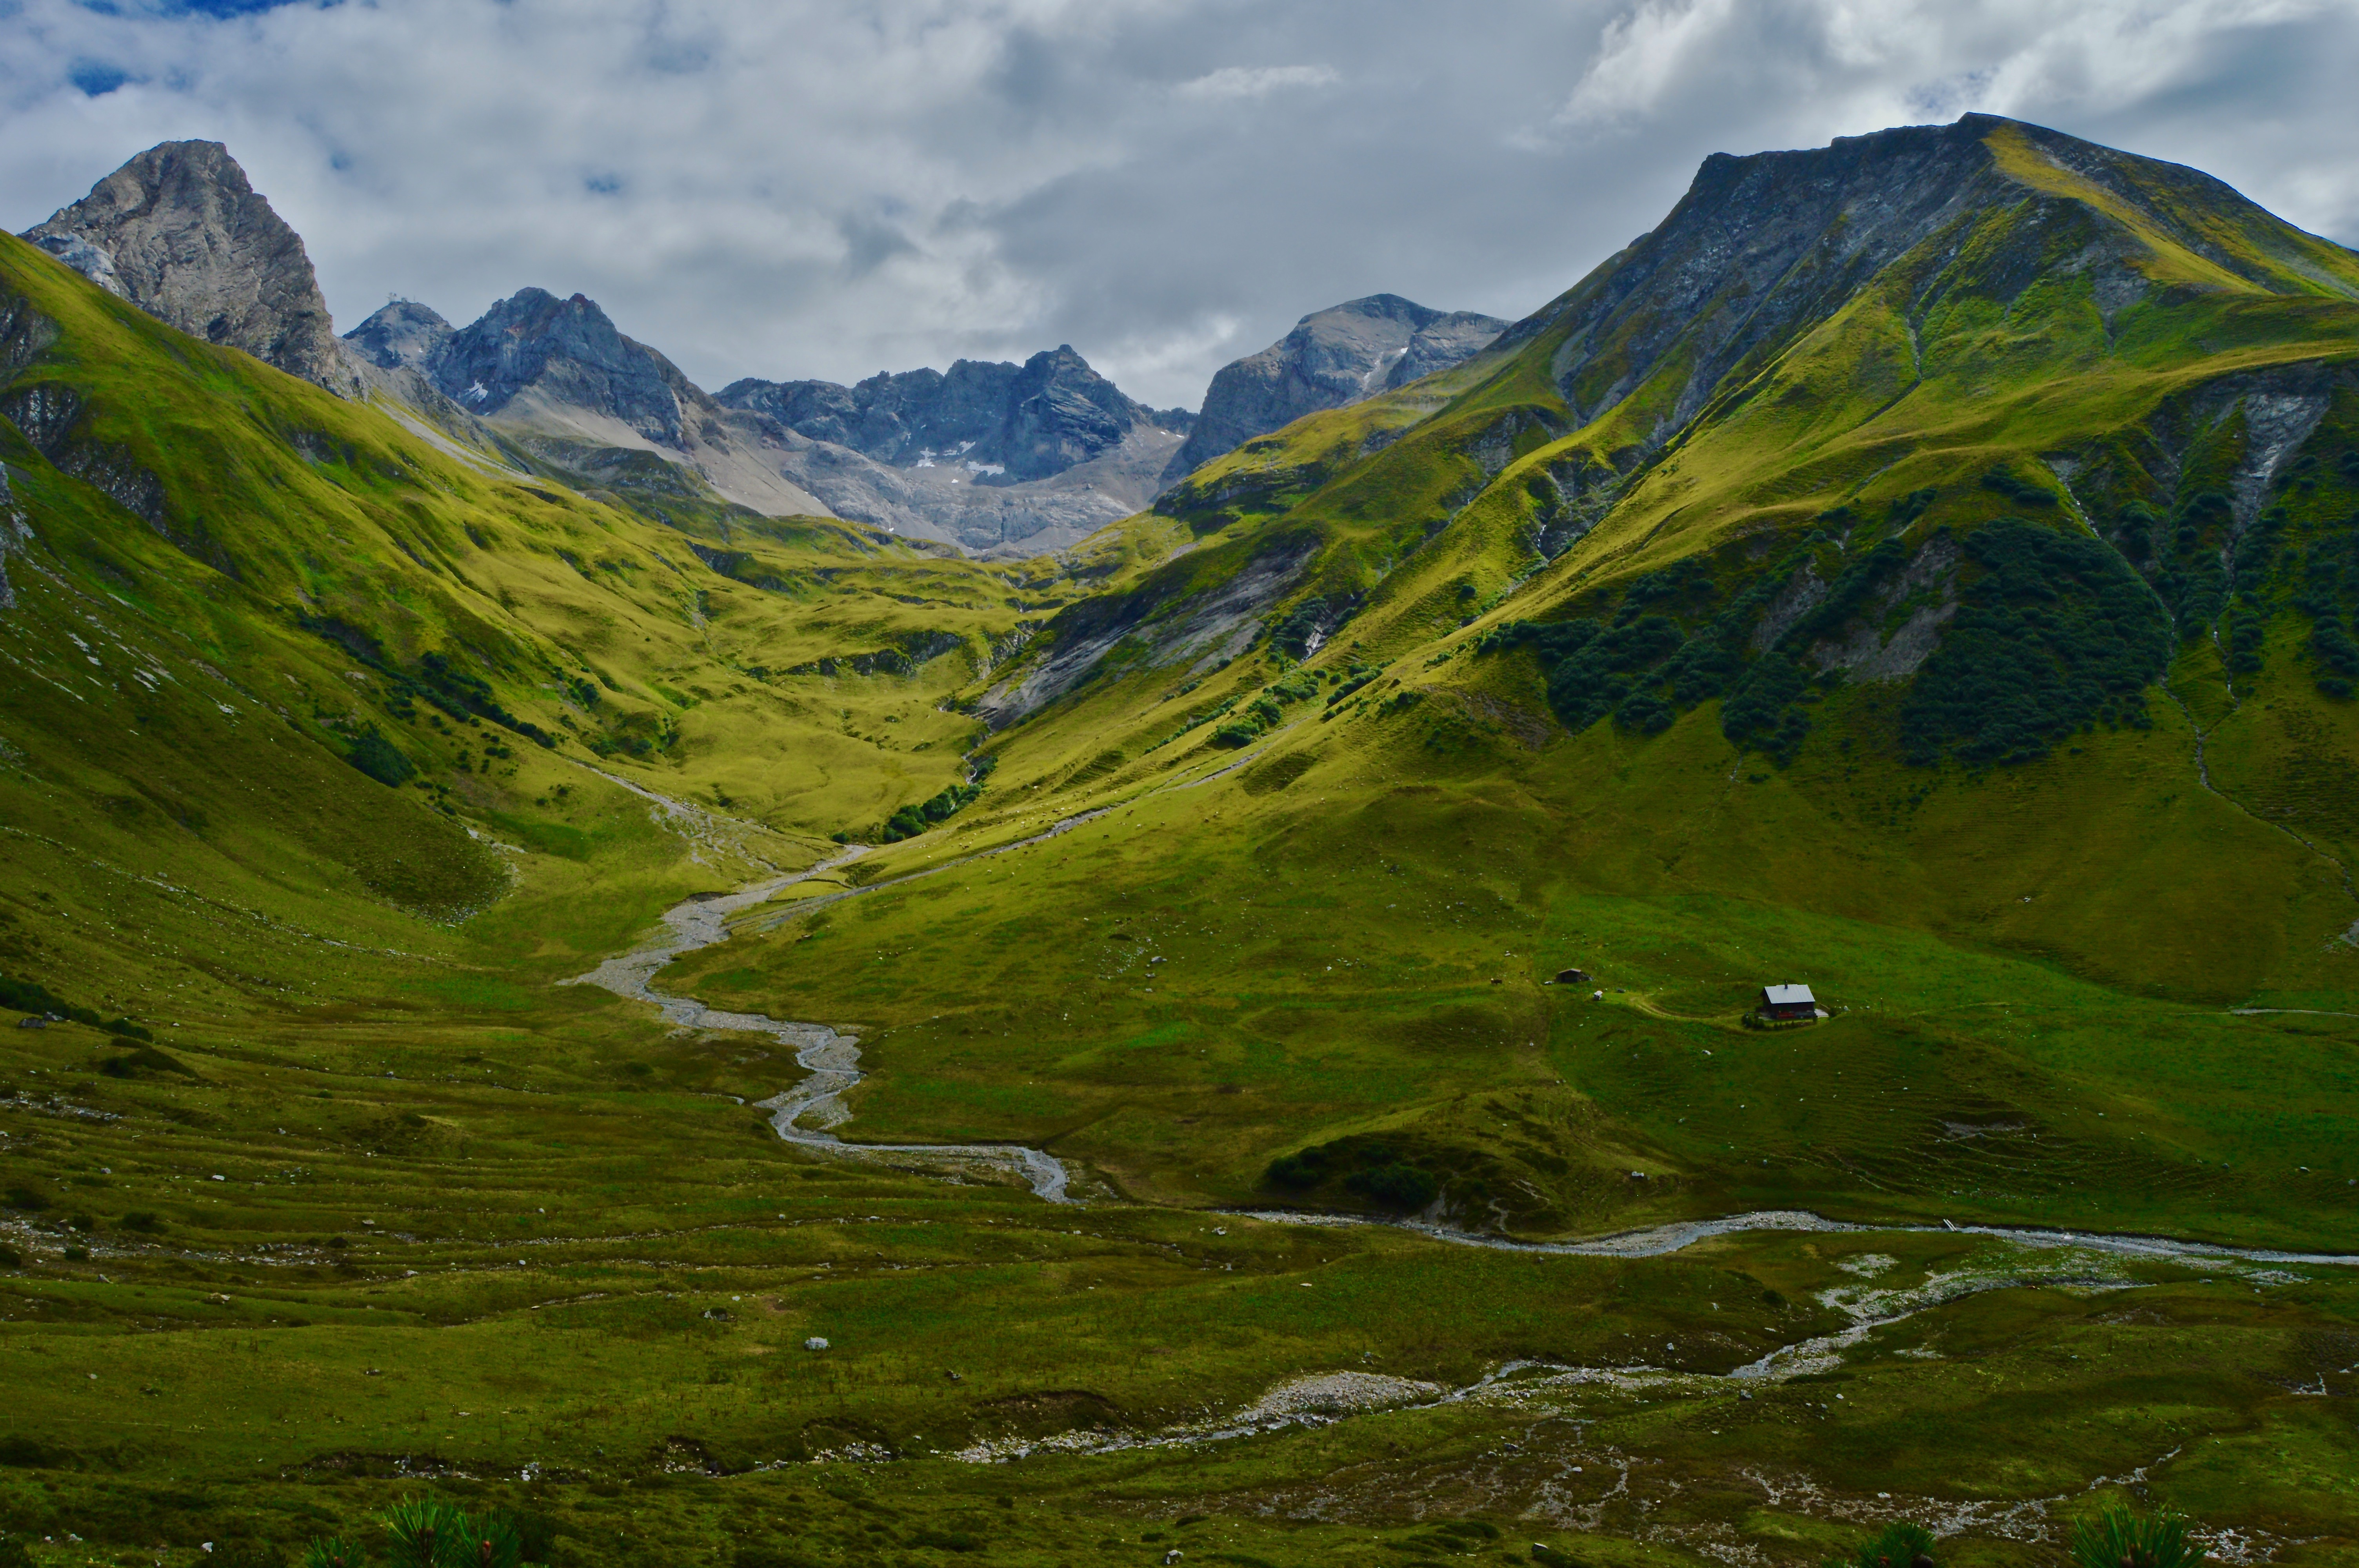 Austrian Alps Journal: A Photo Gallery